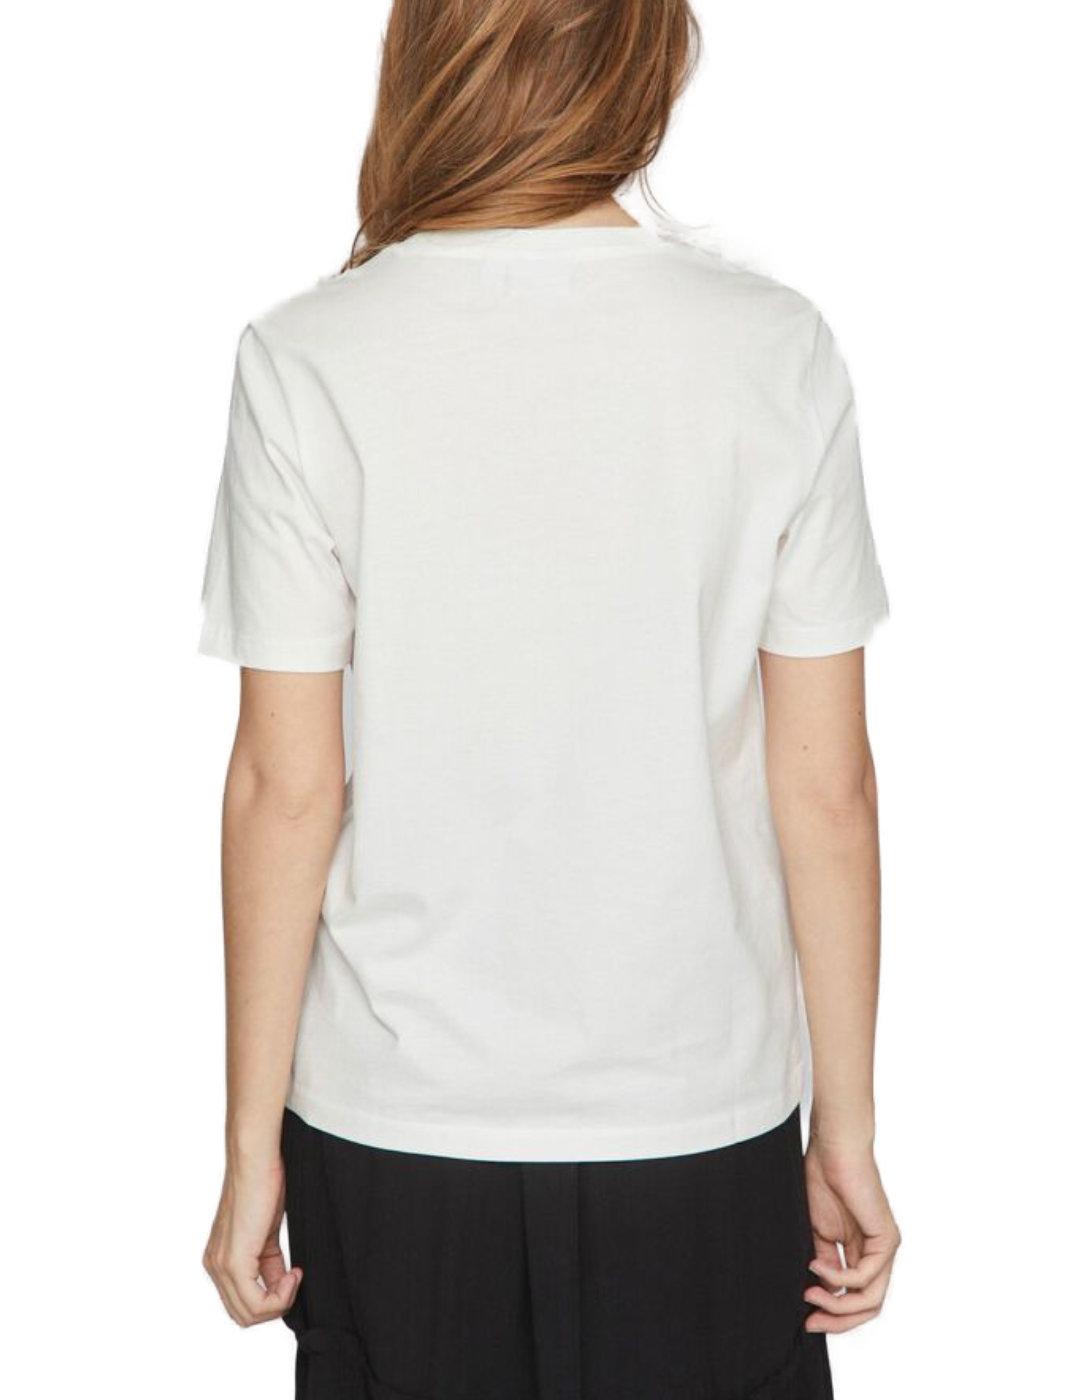 Camiseta Vila Bil blanco manga corta para mujer